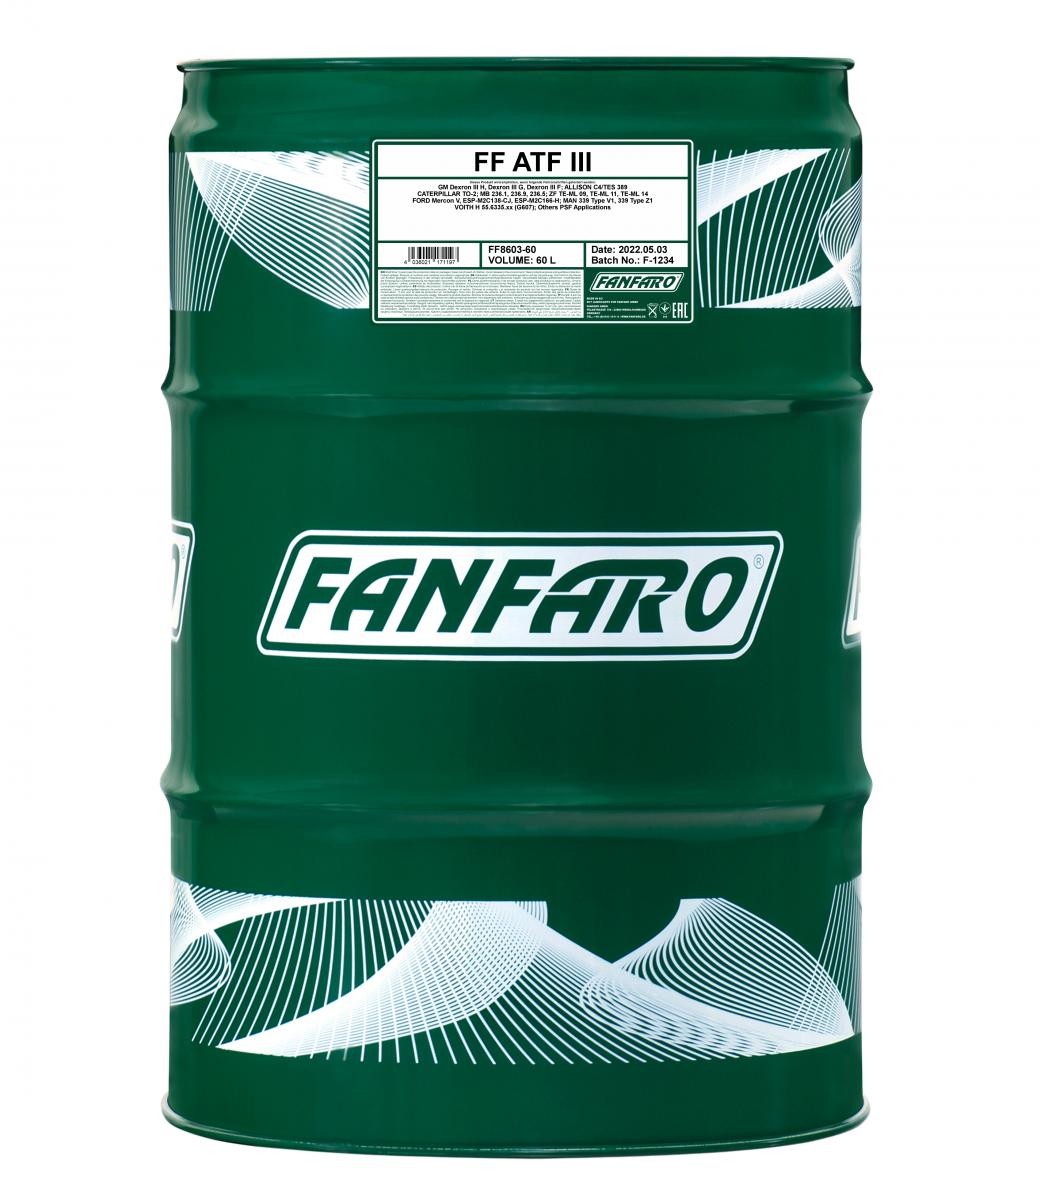 FF8603-60 FANFARO Atf VOLVO ATF III, 60l